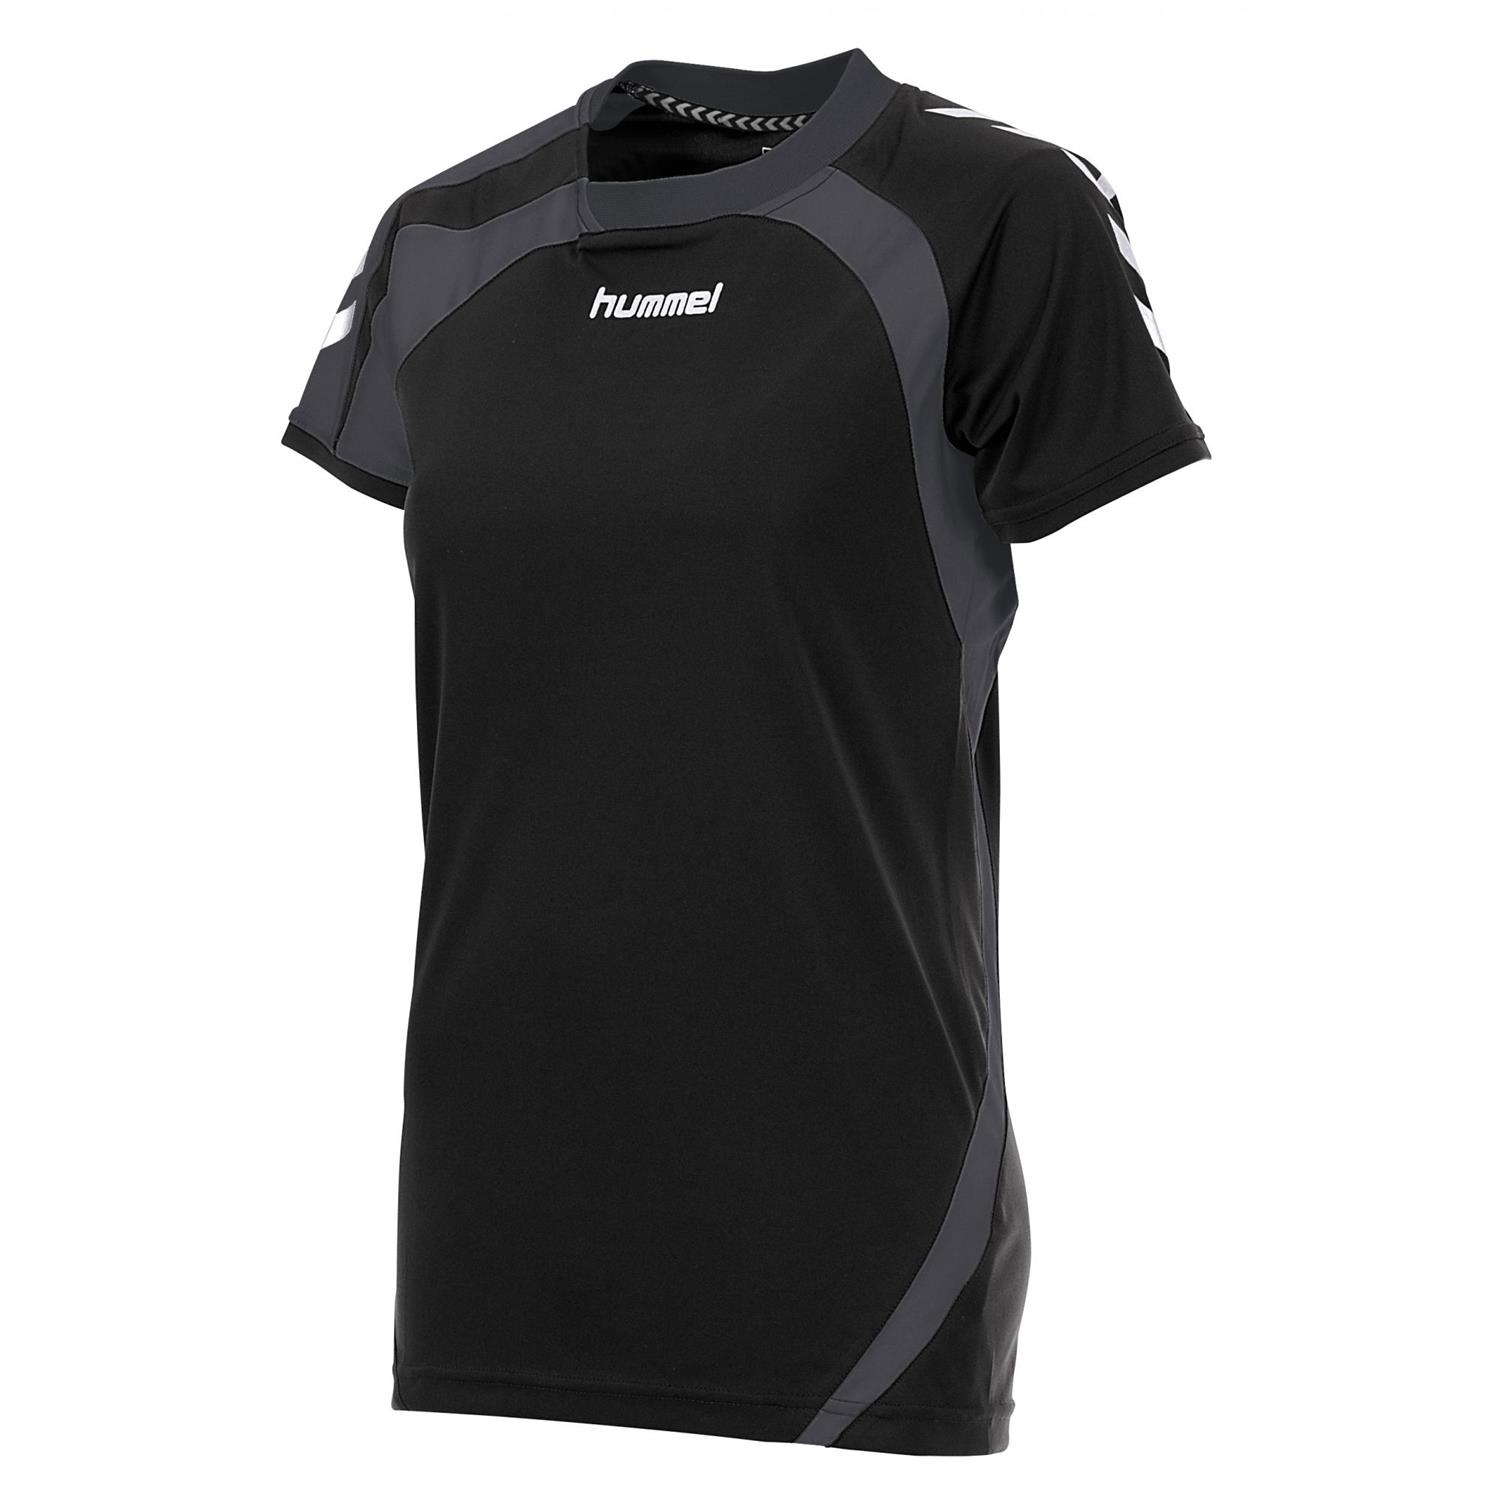 Hummel Shirt Ladies Ss 110601-8900 van sportshirts